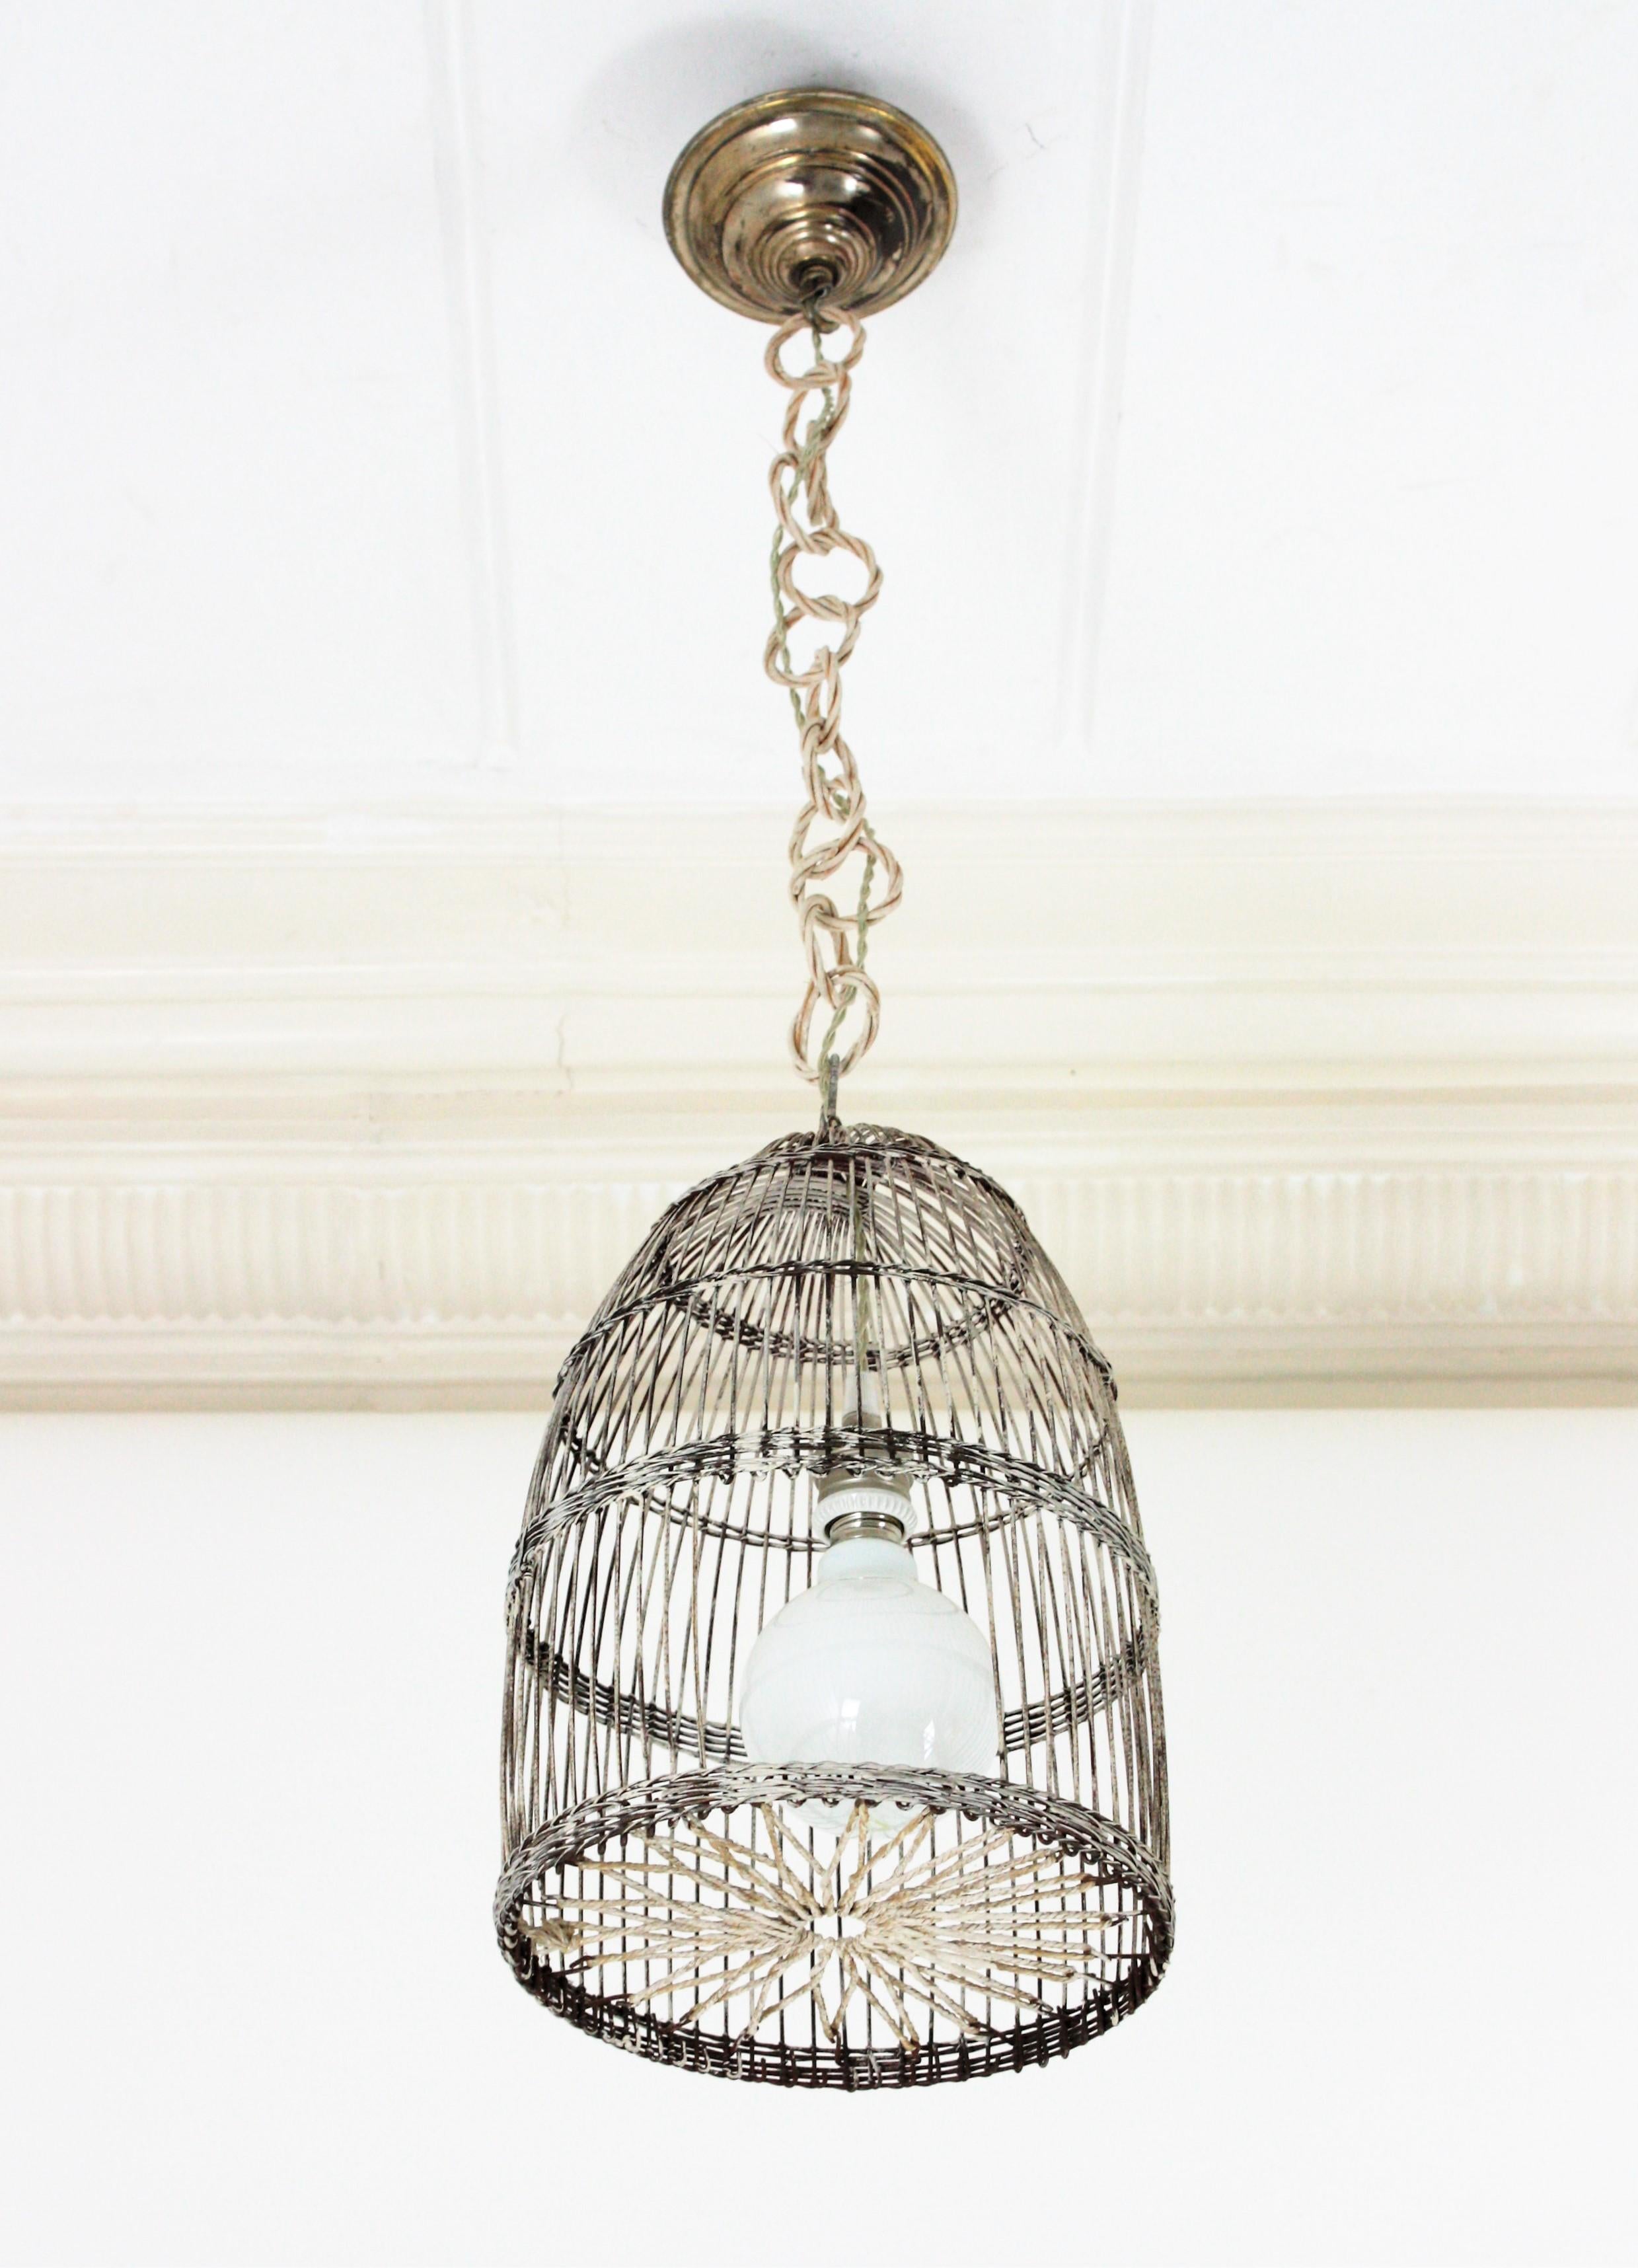 Birdcage Rustic Hanging Light Pendant Lamp 3